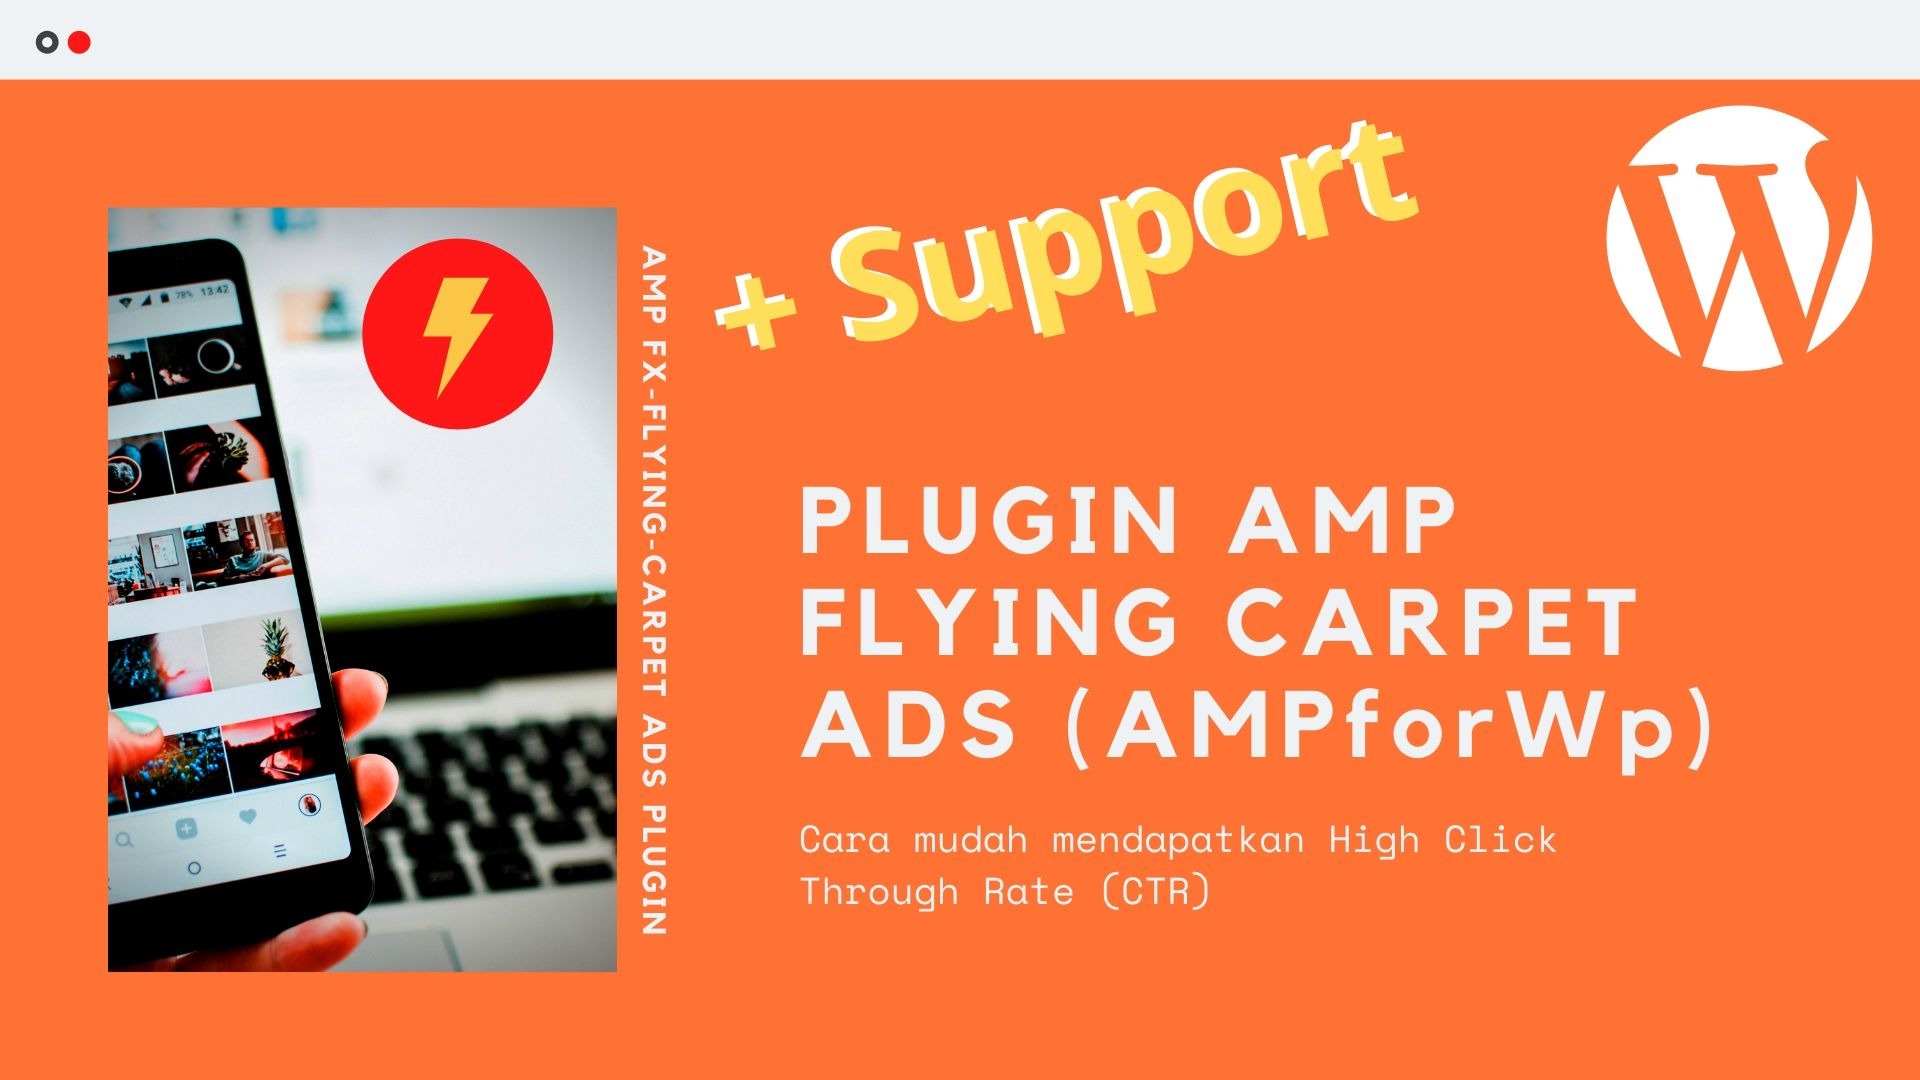 Gambar Produk Plugin AMP FX Flying Carpet Ads Parallax Untuk Wordpress AMPforWP Plus Layanan Support